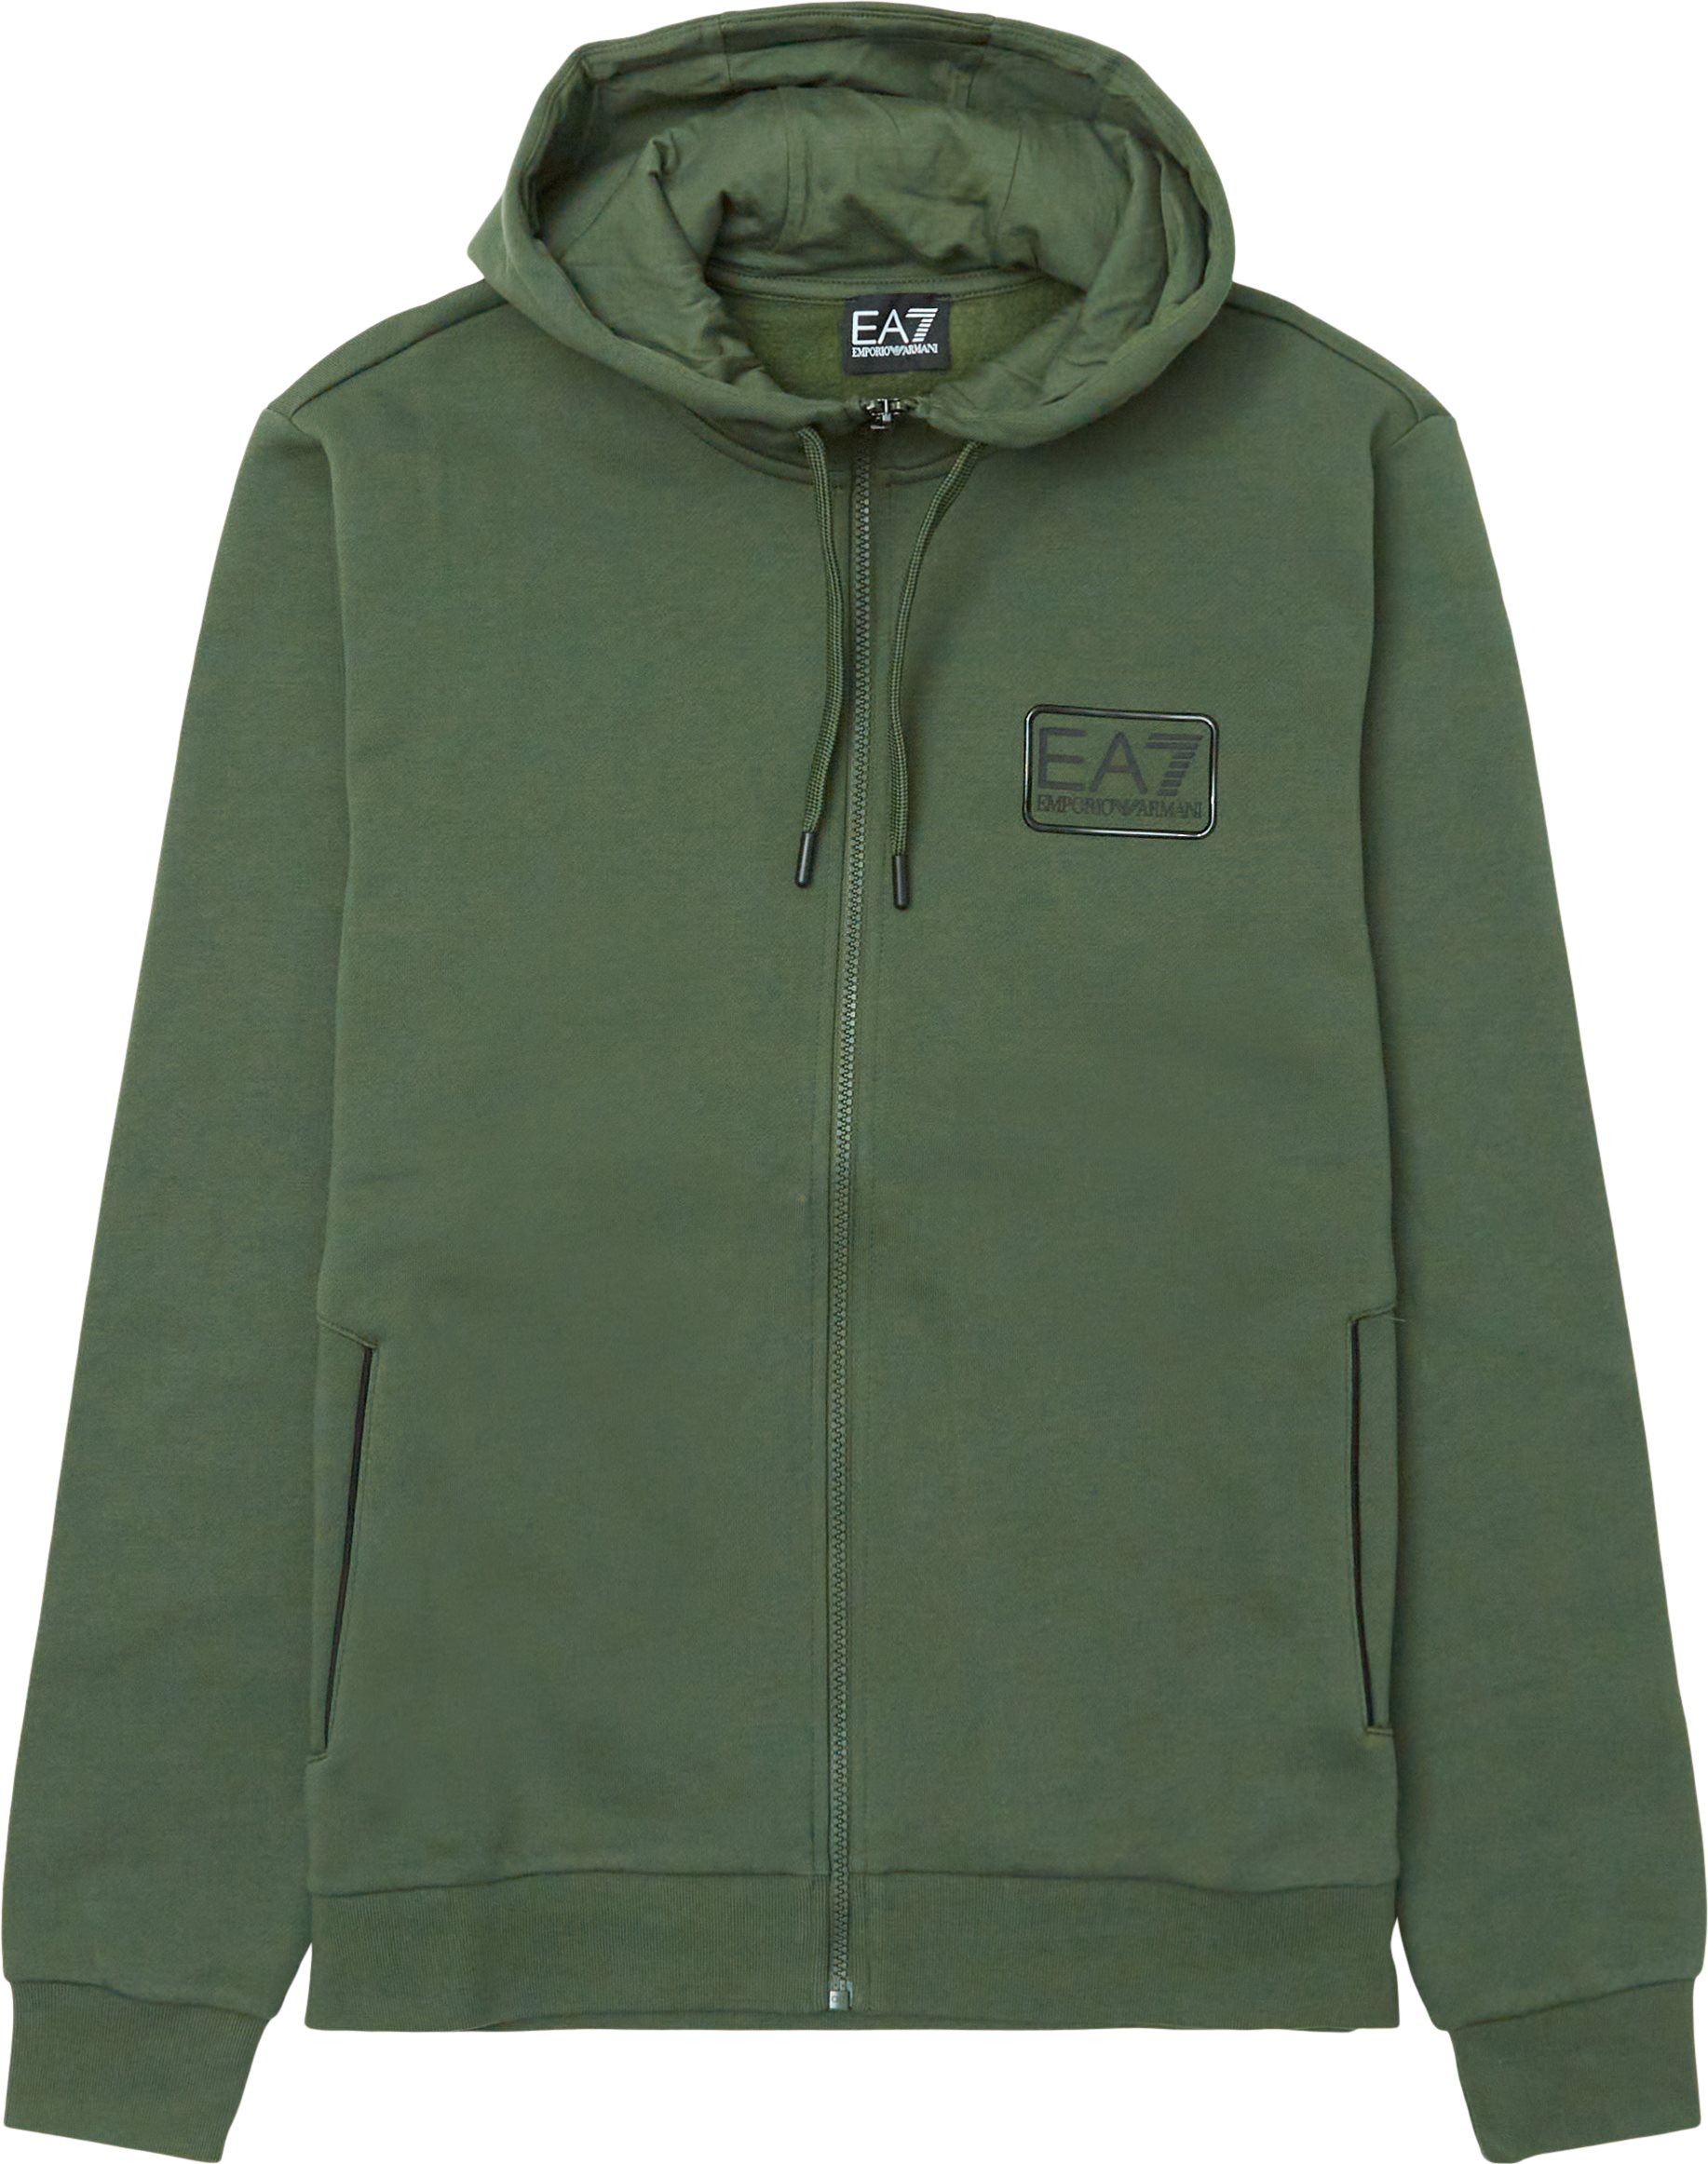 Pj07z-3lpm97 Zip Sweatshirt - Sweatshirts - Regular fit - Green